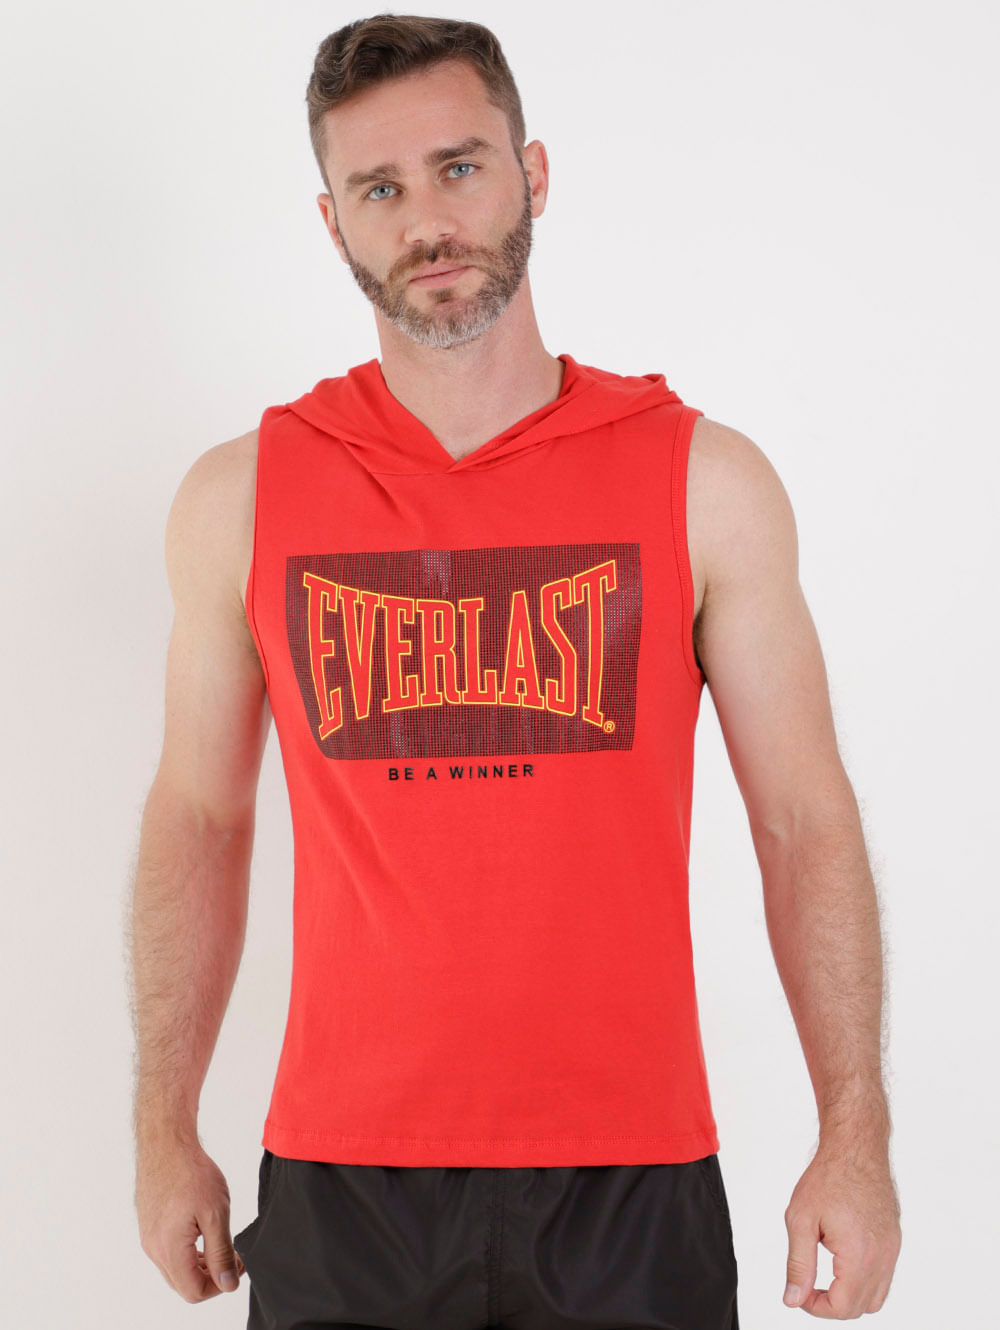 SPORTIME] [Camiseta Everlast Logo Vermelha]